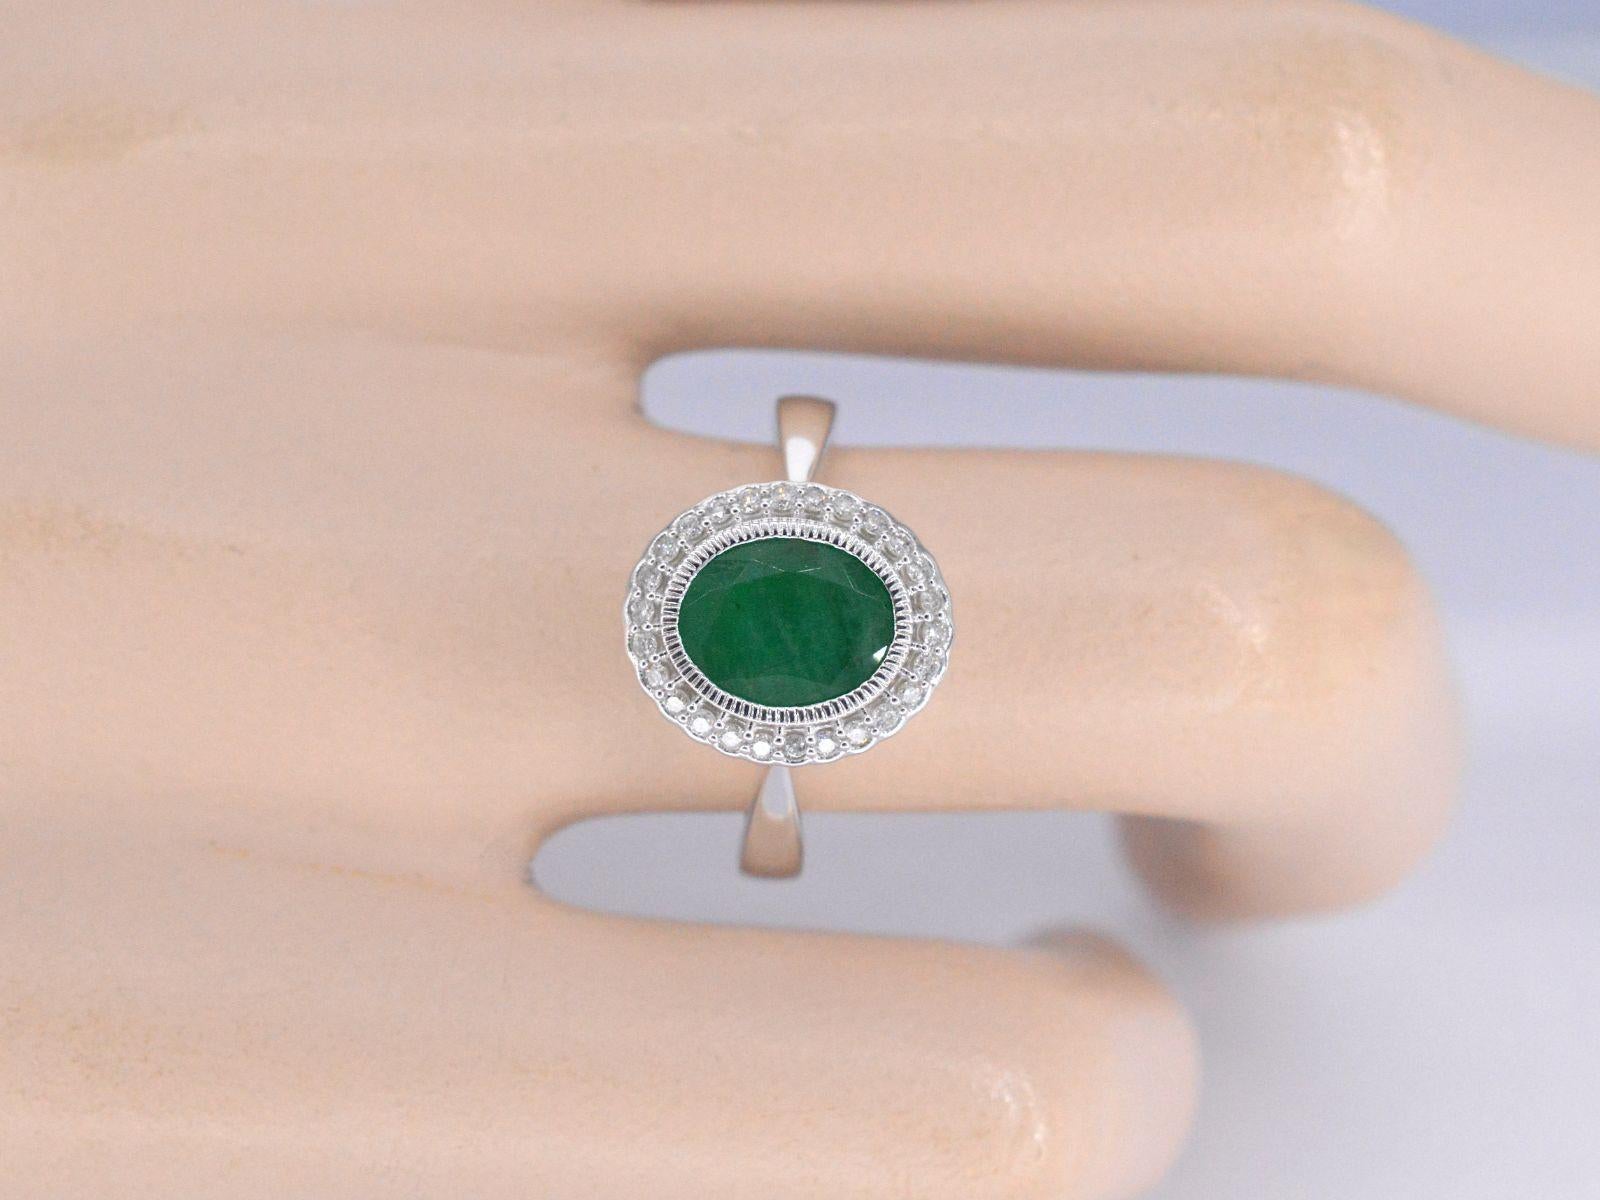 Diamonds

Weight: 0.15 carat

Cut: Brilliant cut

Colour: F-G

Clarity: SI-P

Quality: Very good

Gemstone: Emerald

Cut: Oval cut

Weight: 2.00 carats

Jewel: Ring

Weight: 4.0 gram

Hallmark: 14 karat 

Ring size: 54 (17.25 mm)

Condition: